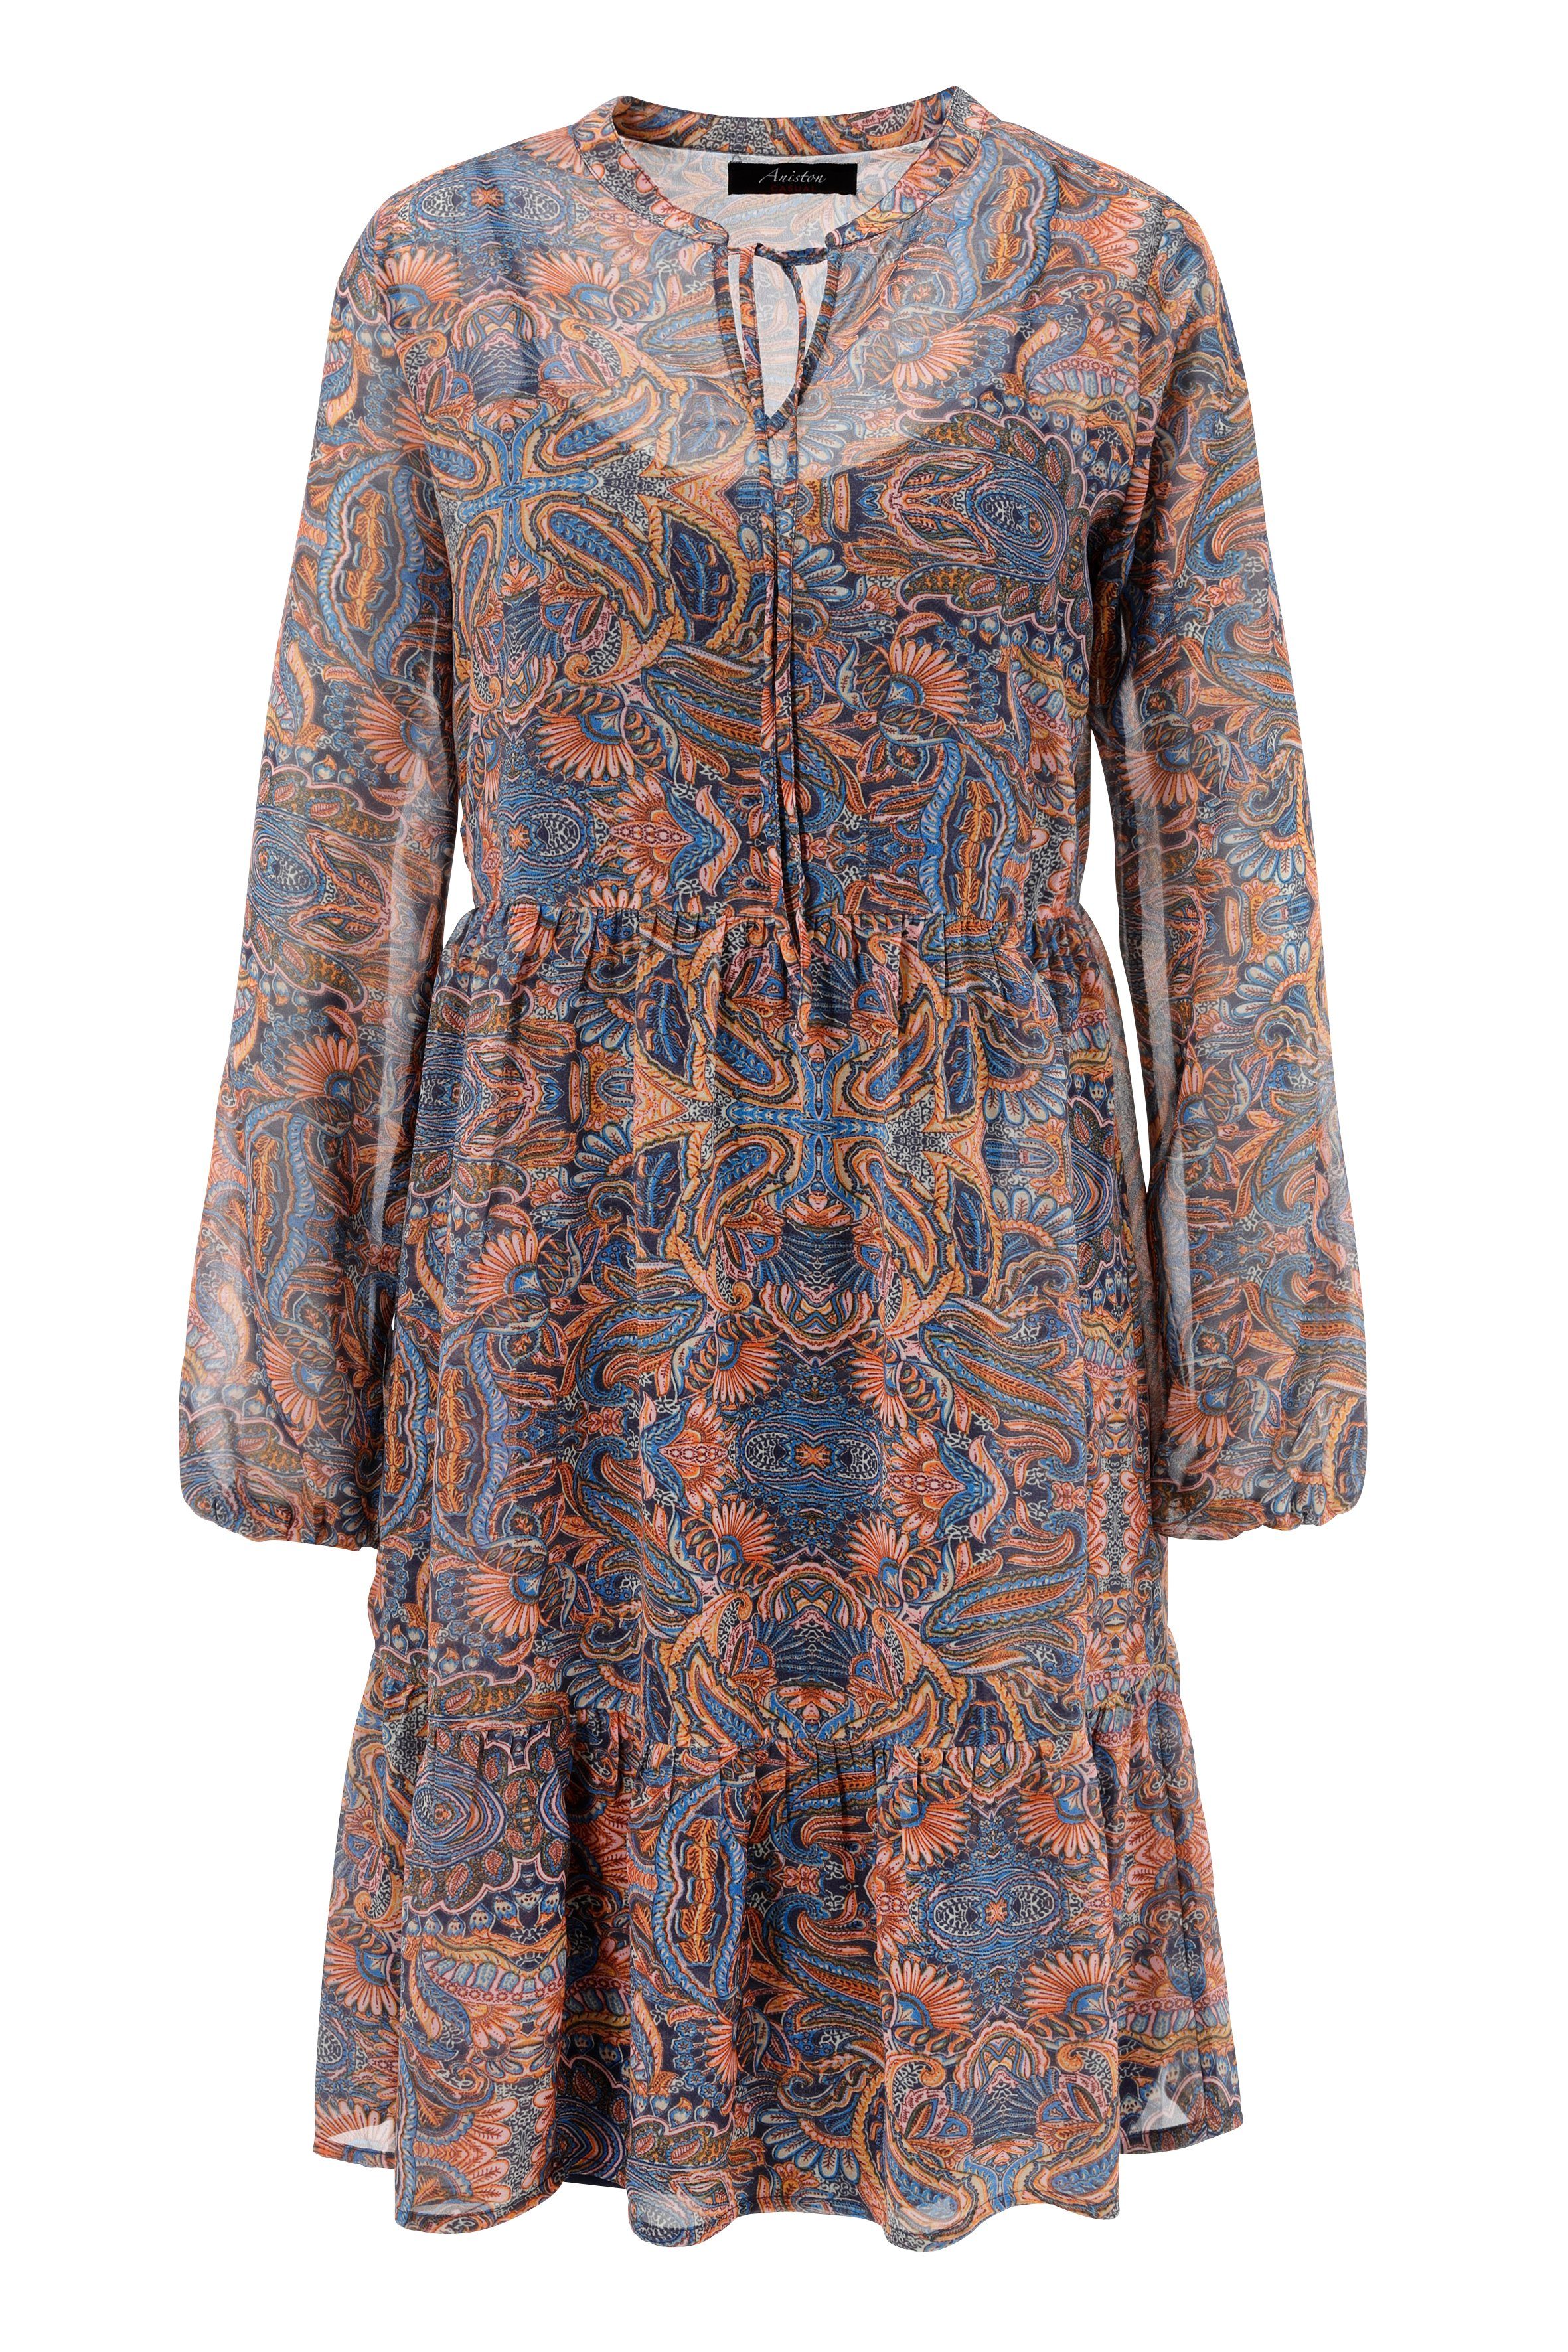 Aniston CASUAL phantasievollem Paisley-Muster bedruckt mit Blusenkleid